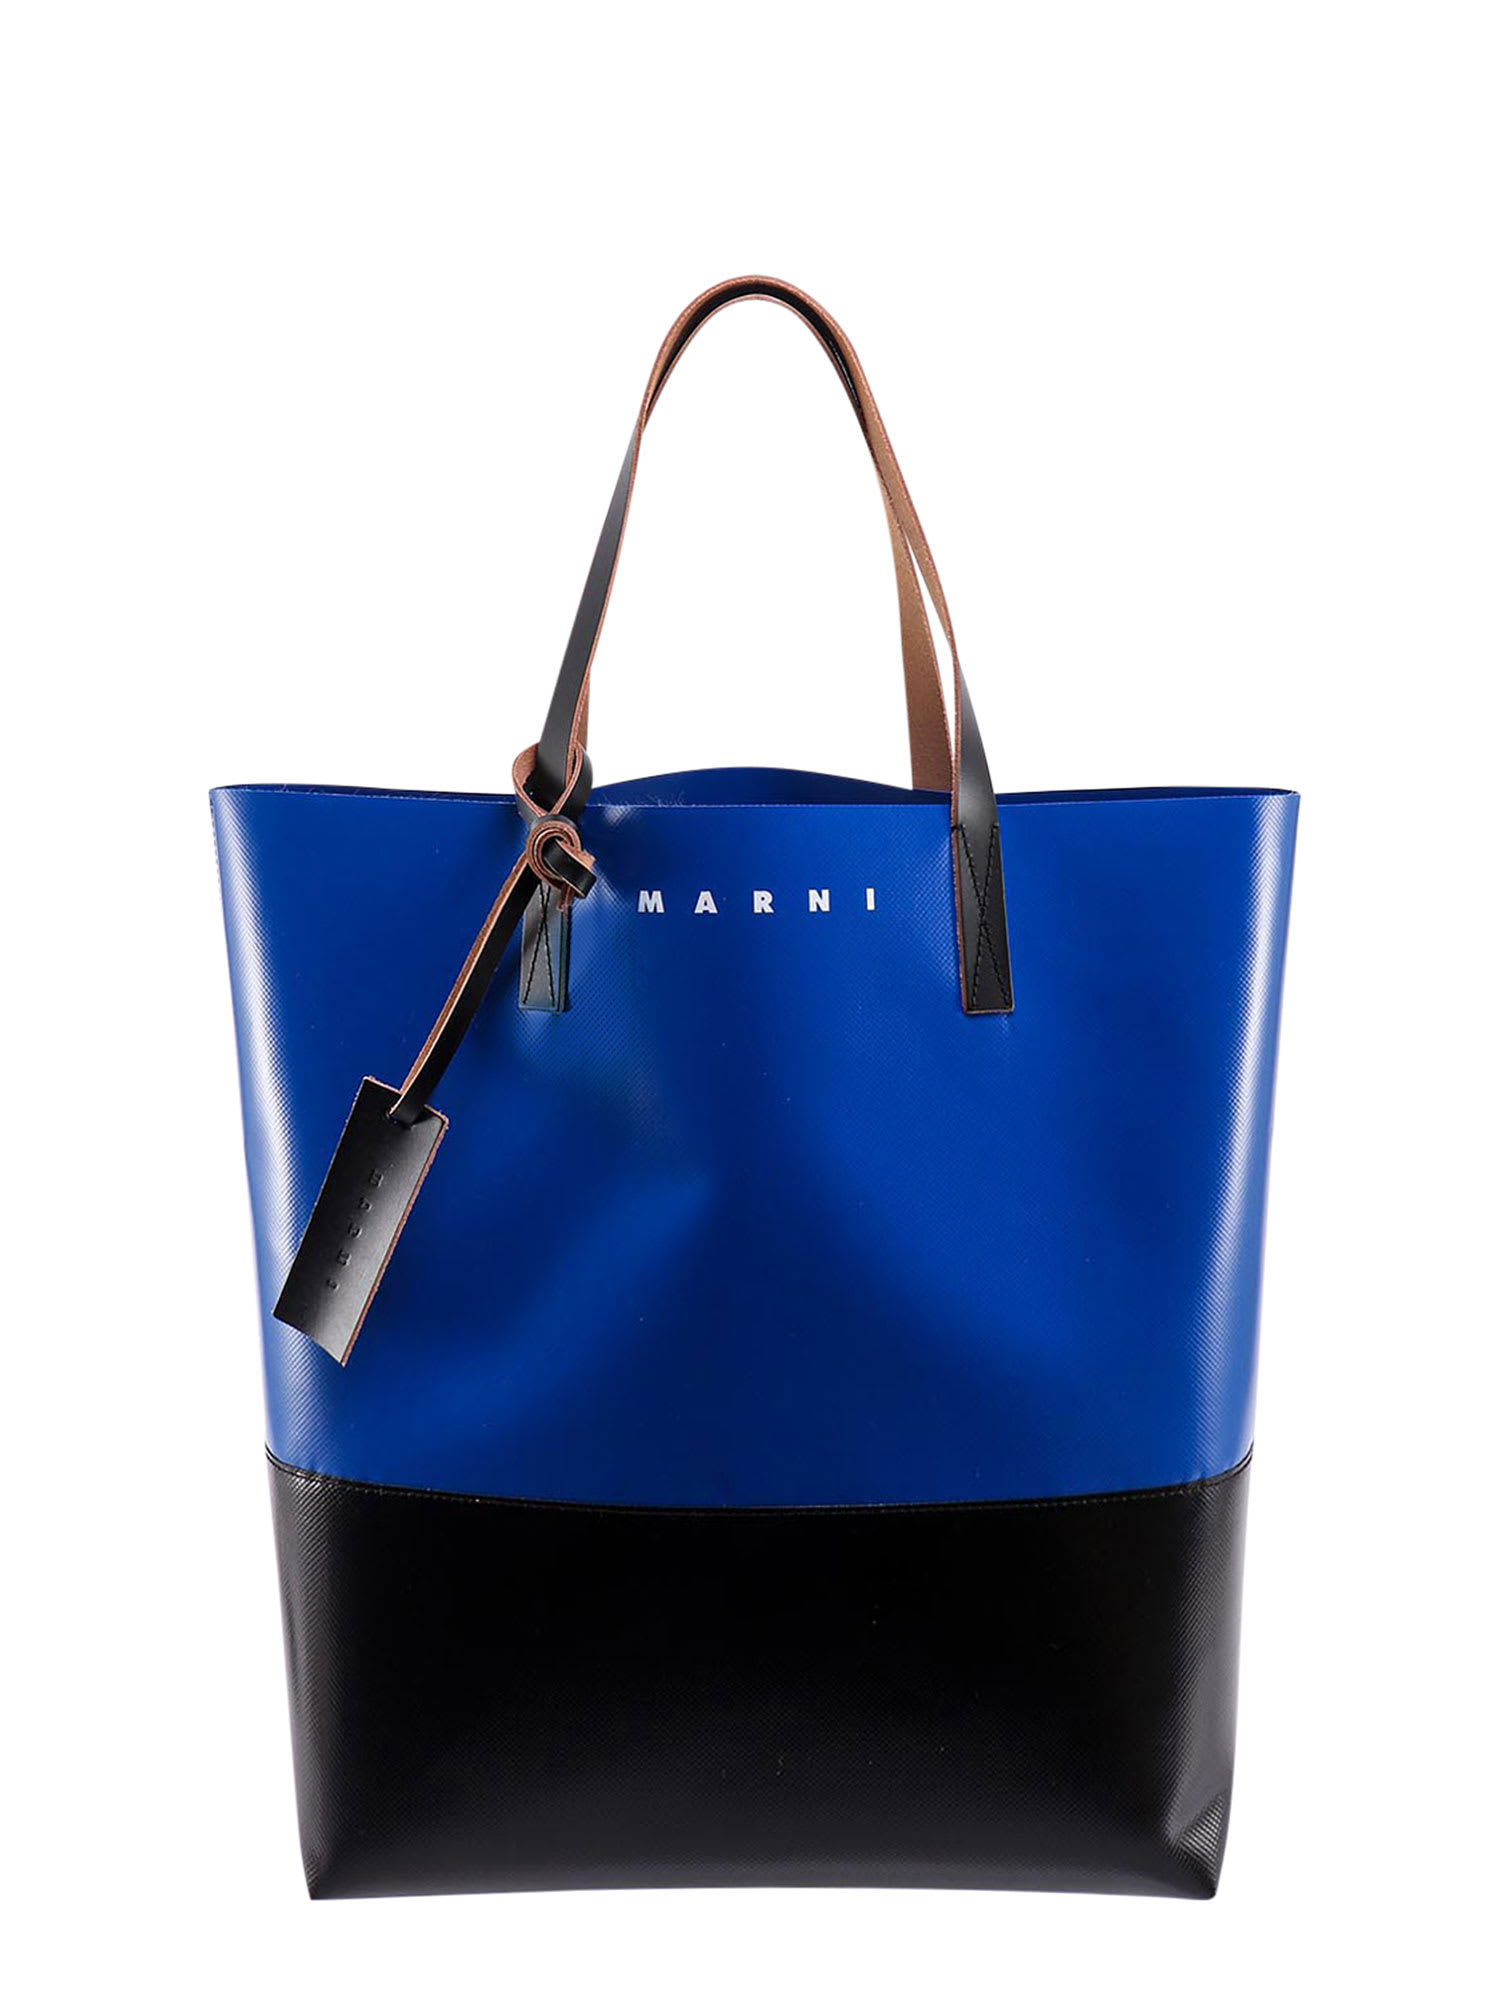 Marni Shoulder Bag In Blu/nero